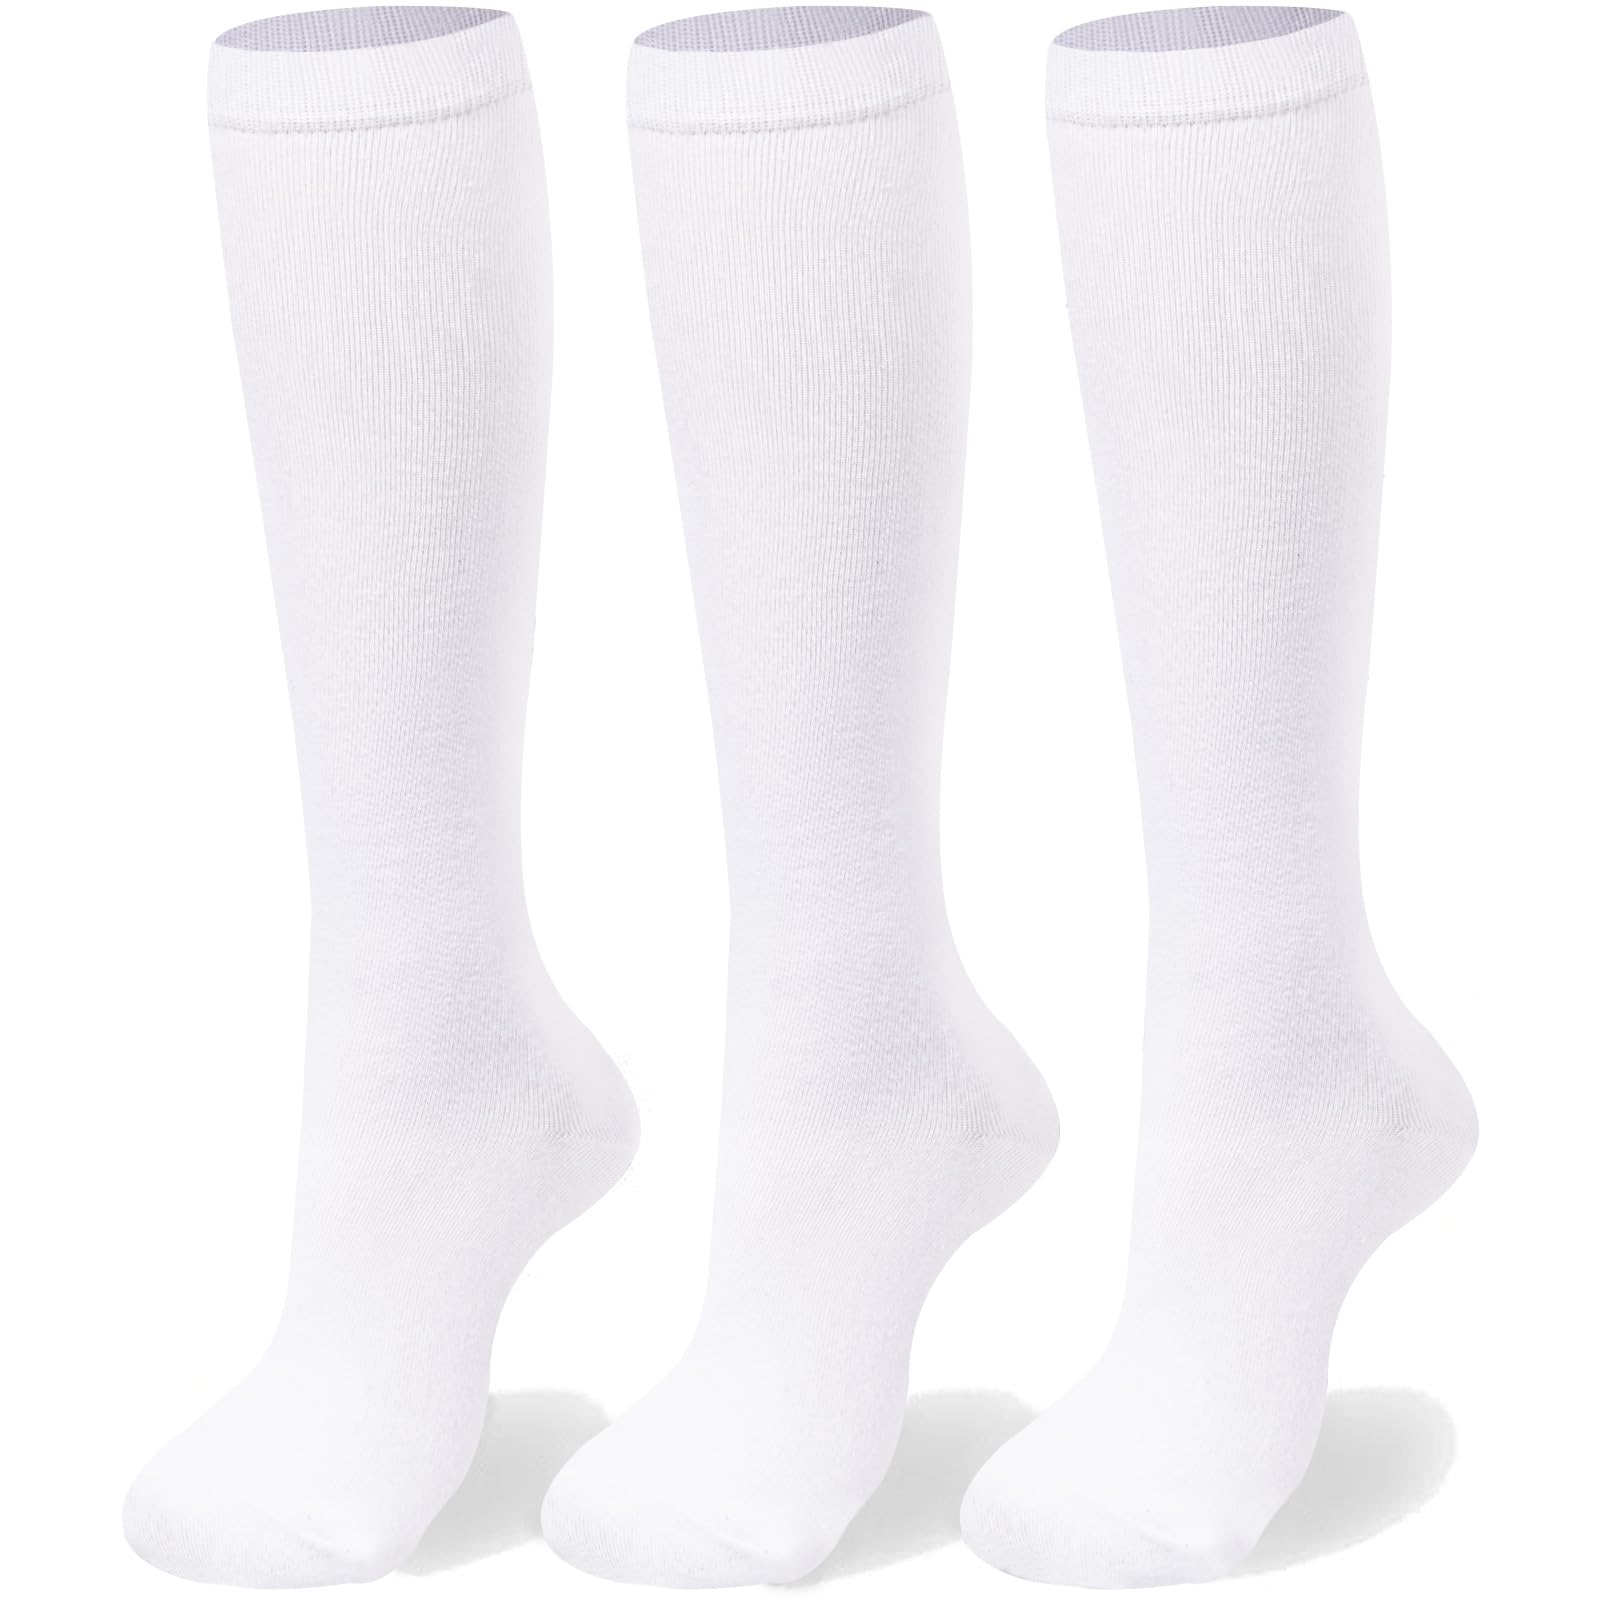 3 Pairs Cotton Knee High Socks Casual-White - Moon Wood